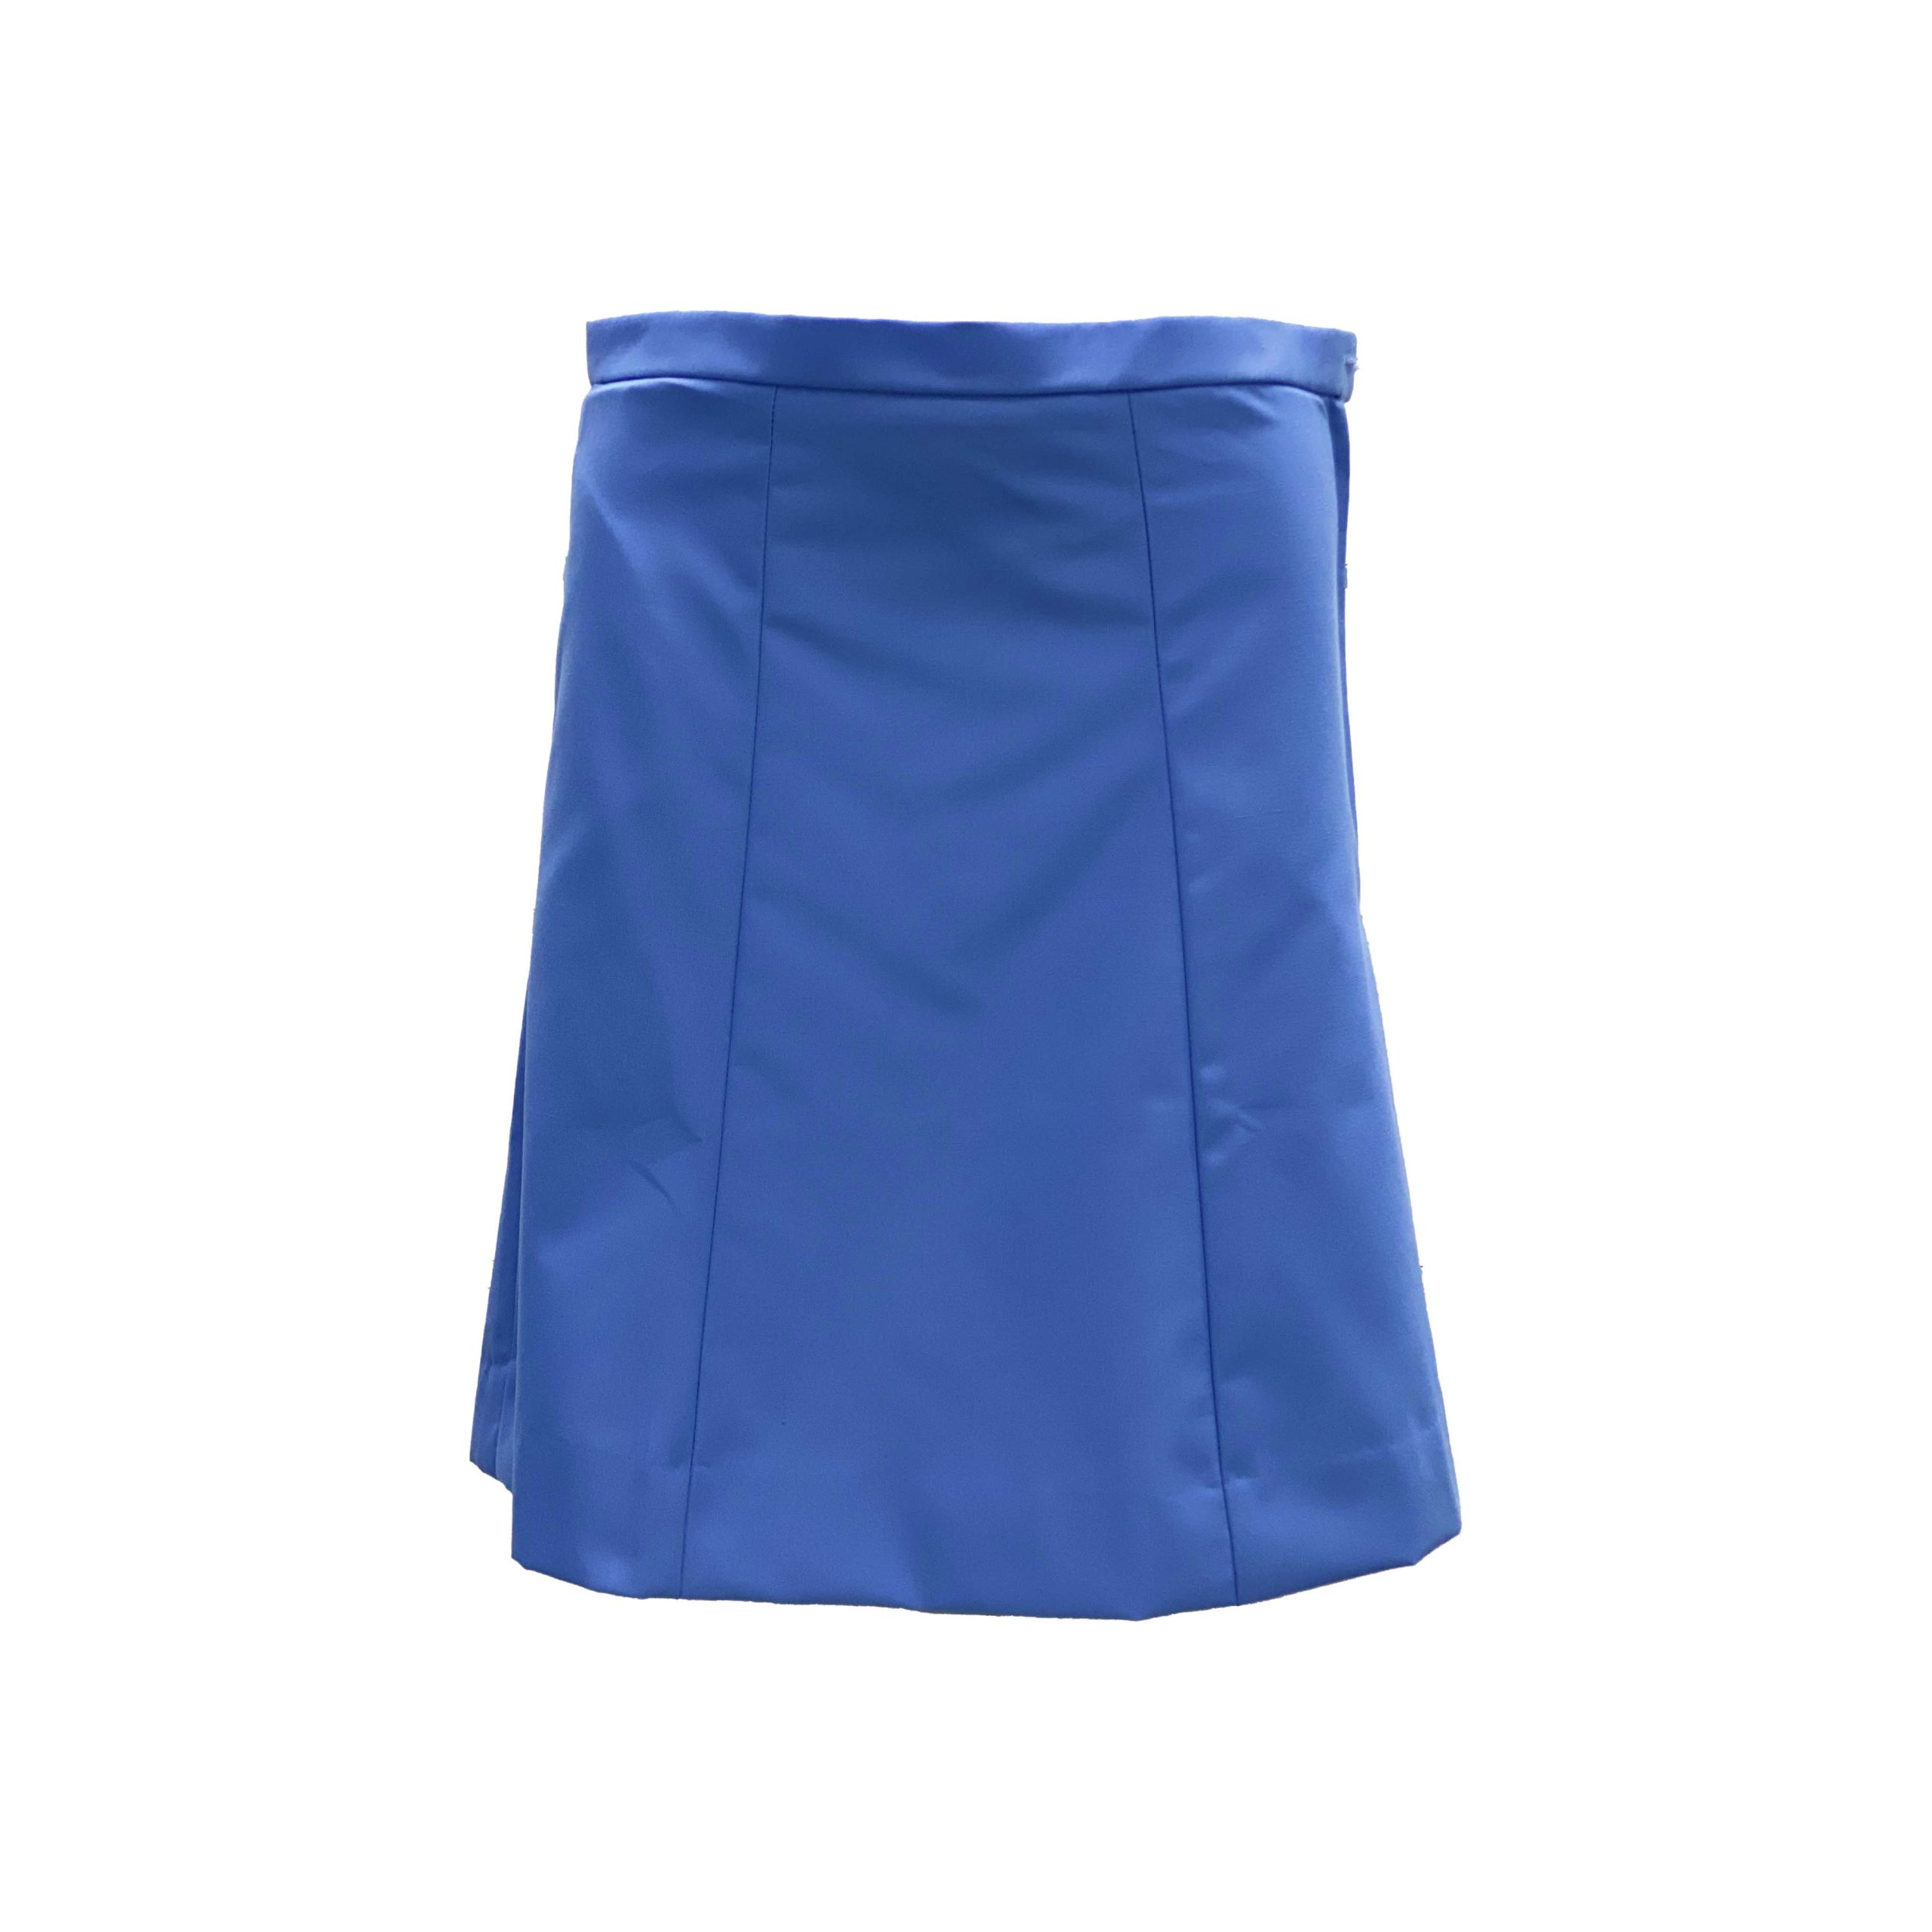 Allwear Plain Skirt Sky Blue - Mary's Outfitters